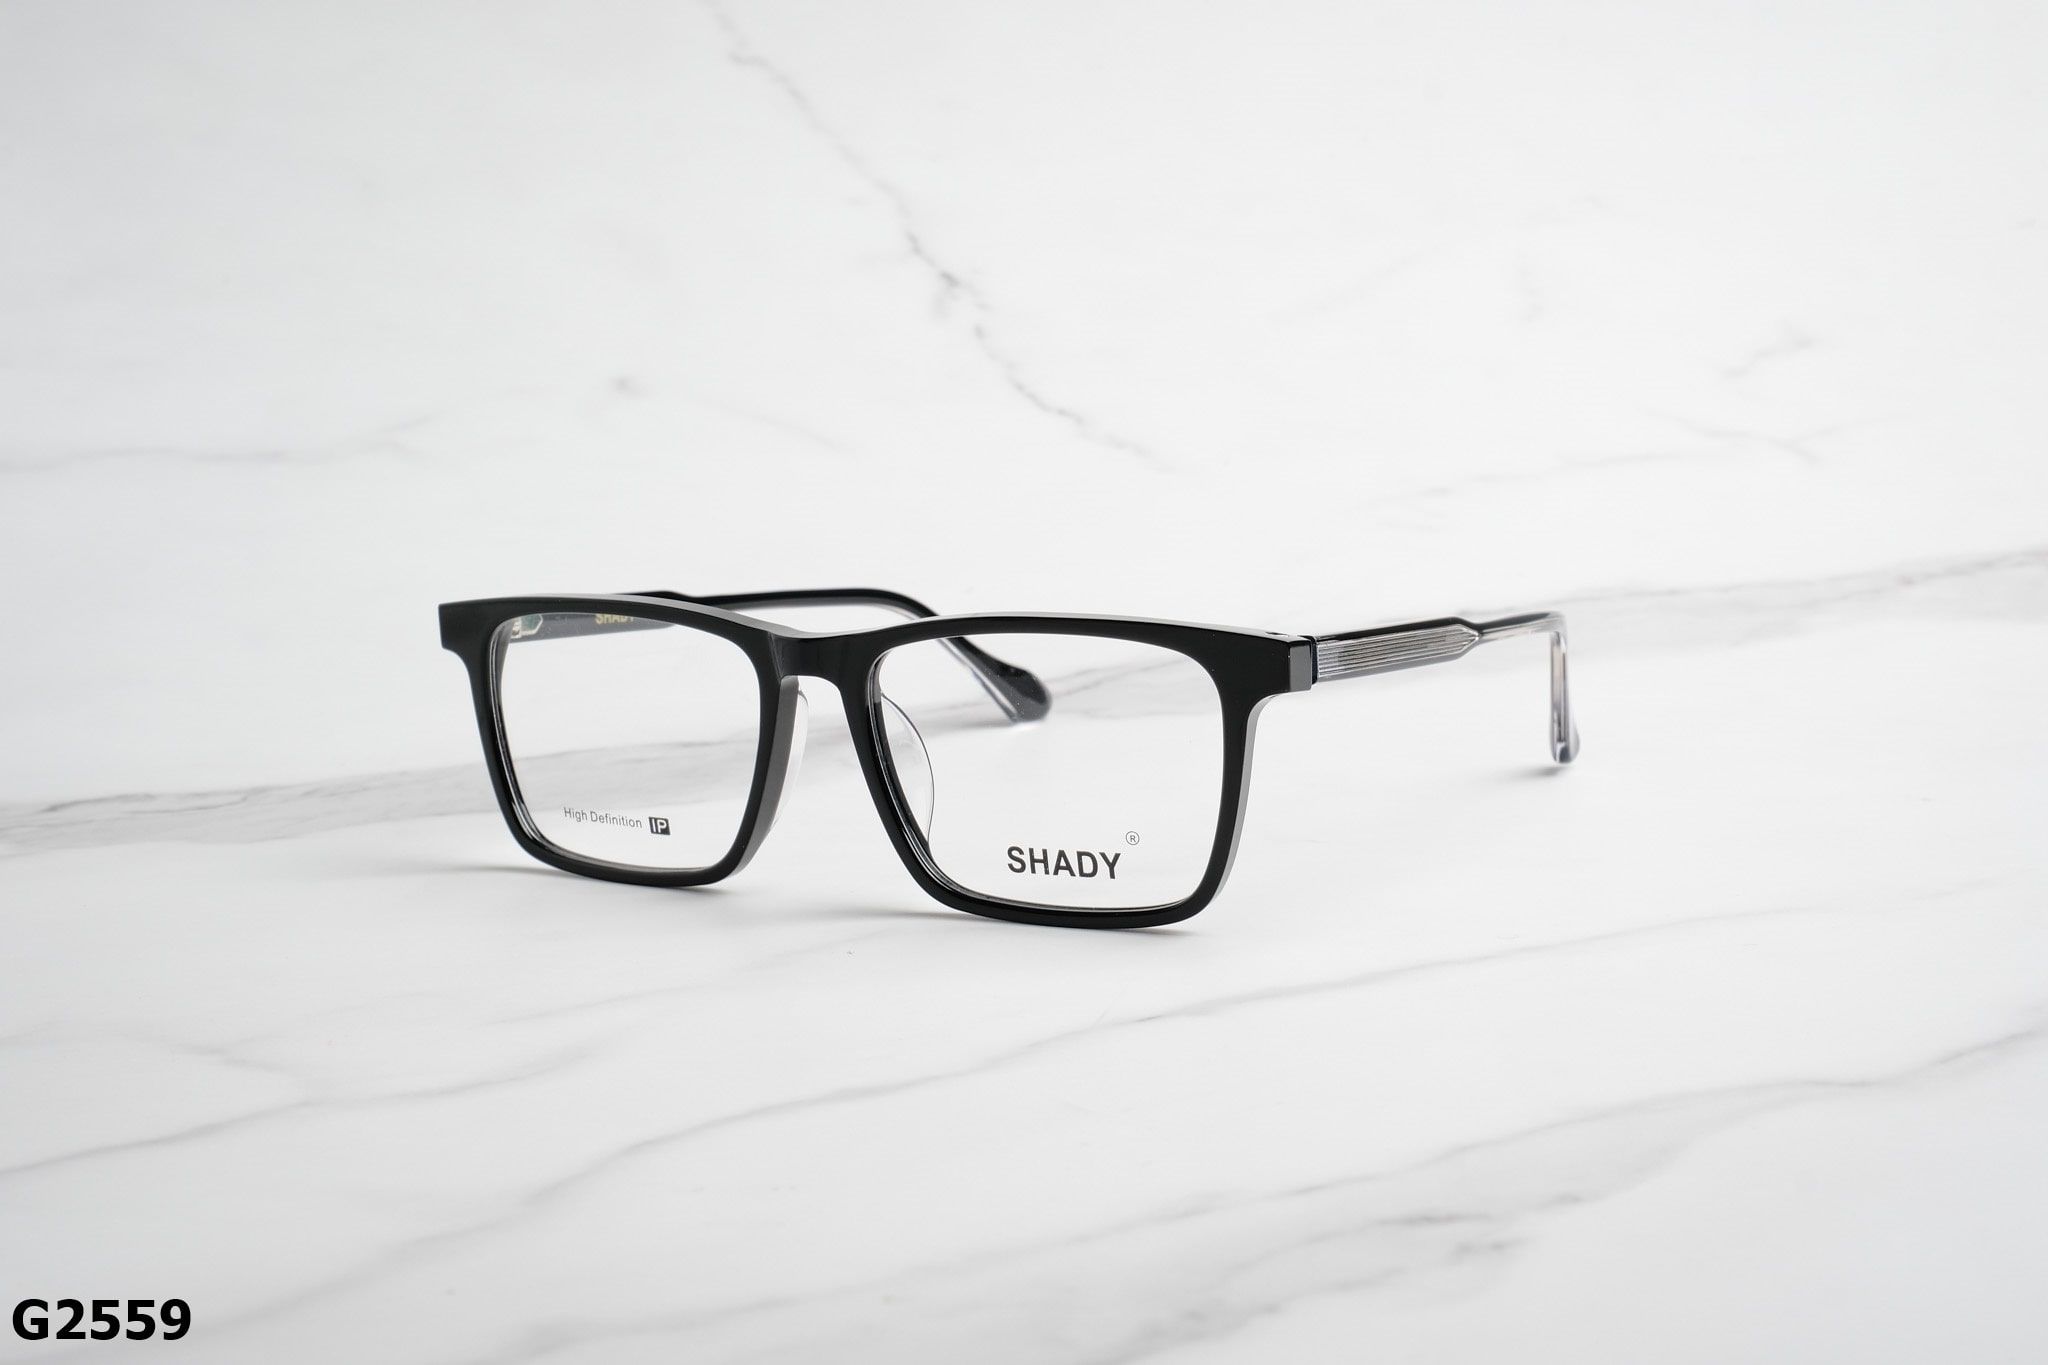  SHADY Eyewear - Glasses - G2559 